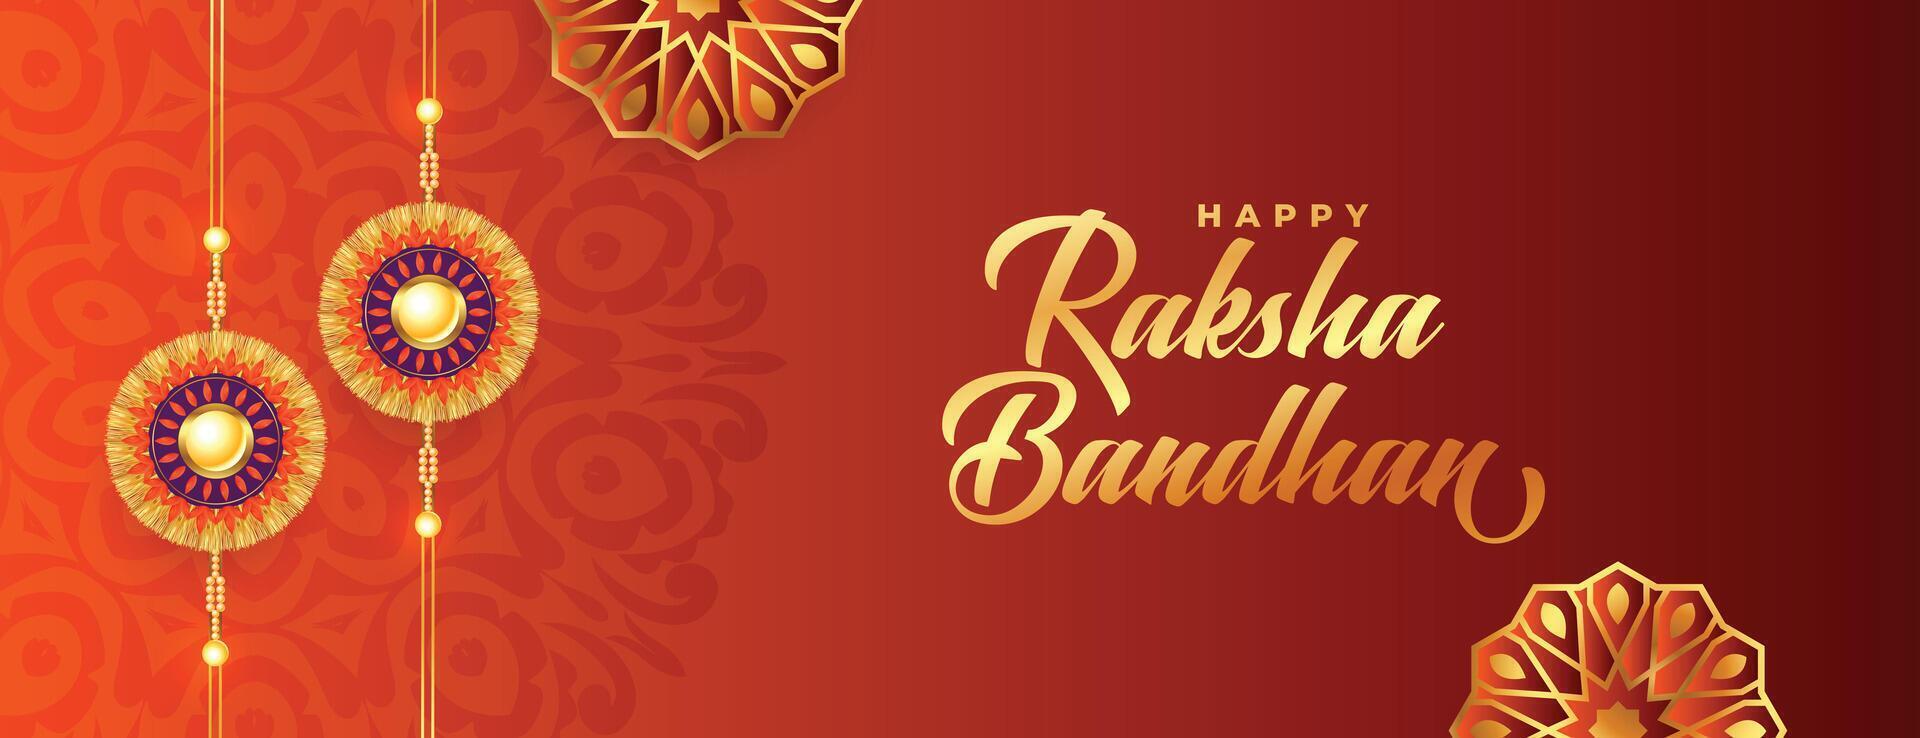 happt Raksha bandhan decorativo bandiera realistico design vettore